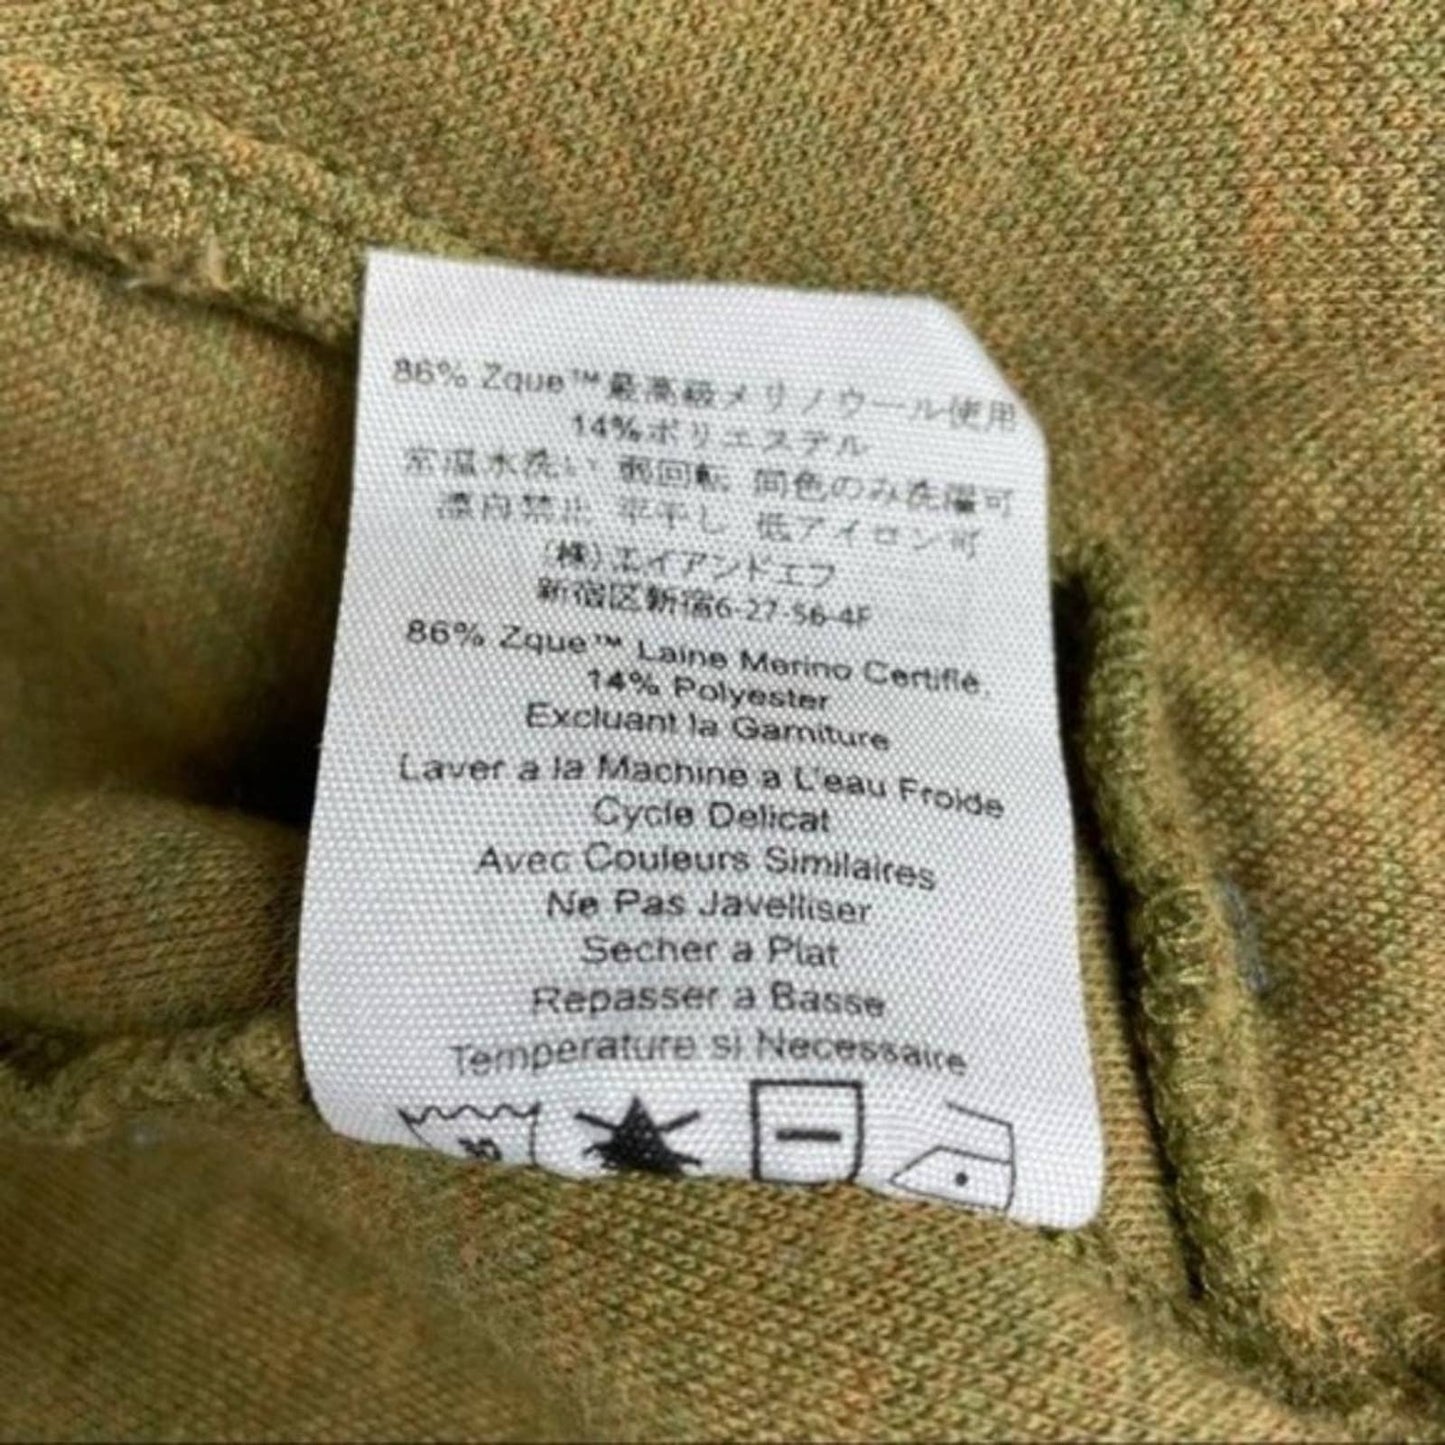 Ibex Alana Olive Khaki Green Merino Wool Full Zip High Collar Jacket Gorpcore Size S